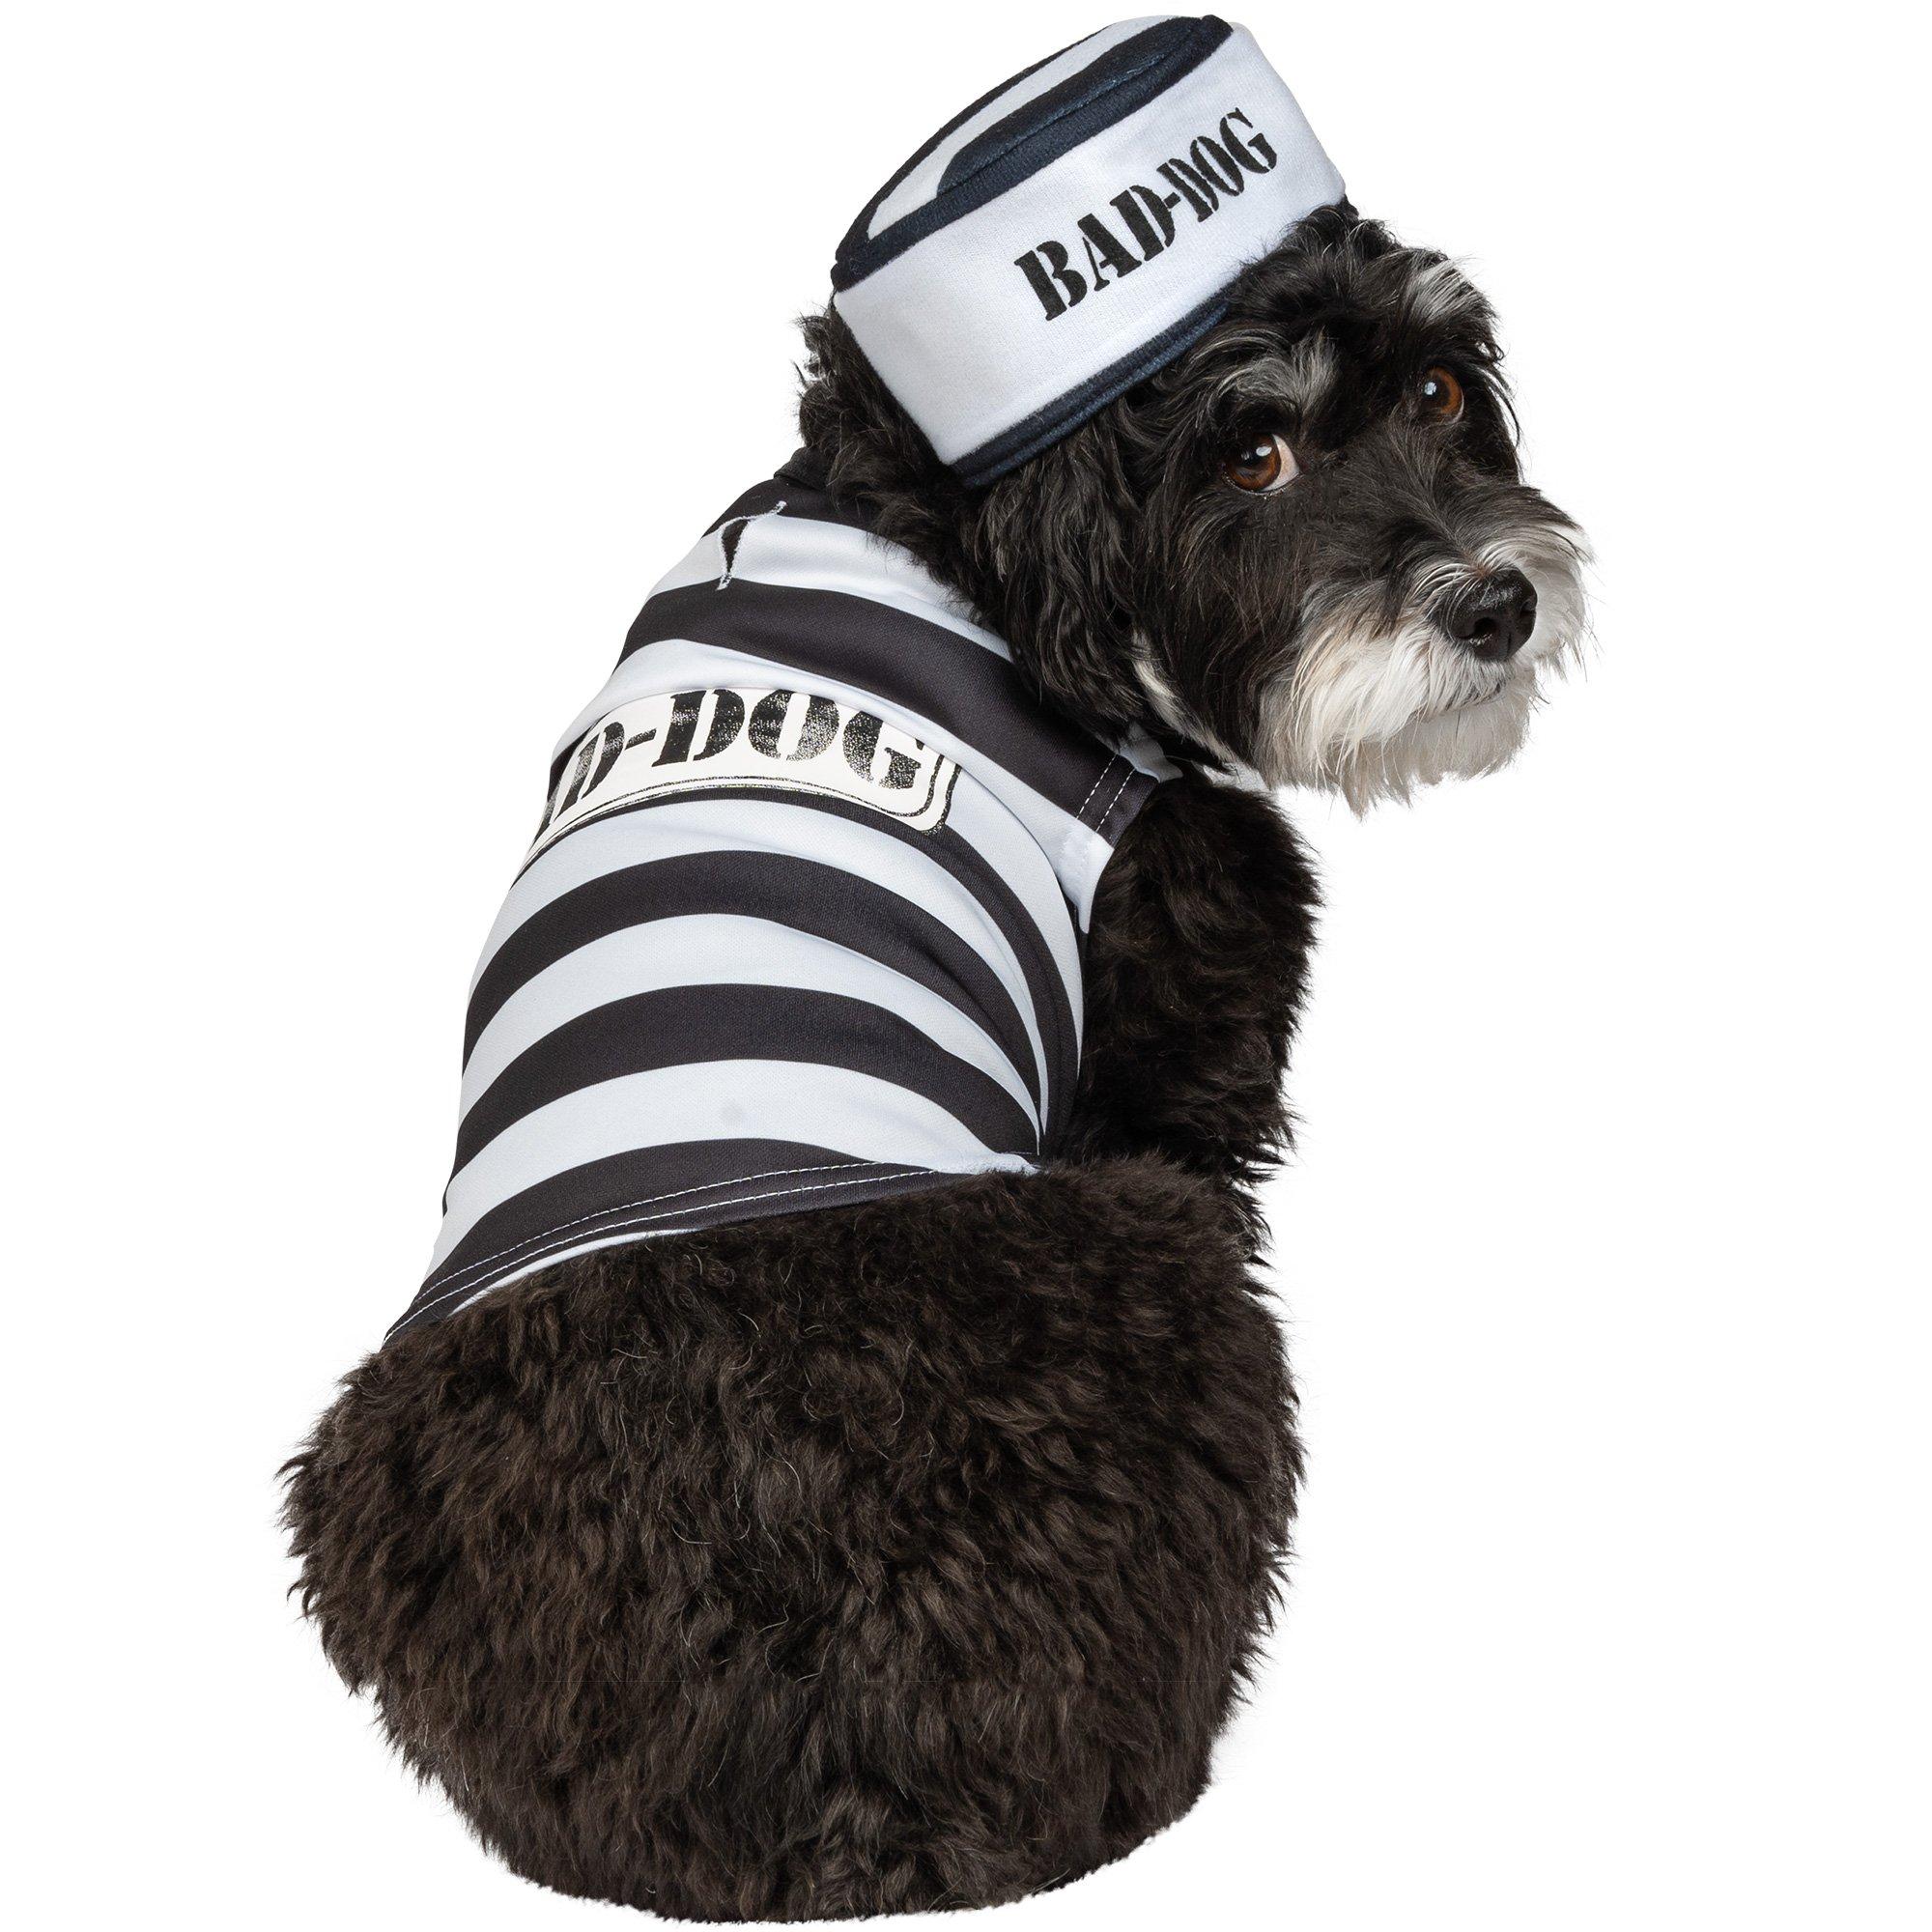  Vercico Dog Halloween Costume Cute DIY Pet Costume Demodog  Cosplay Hat Headgear Props for Cats : Pet Supplies